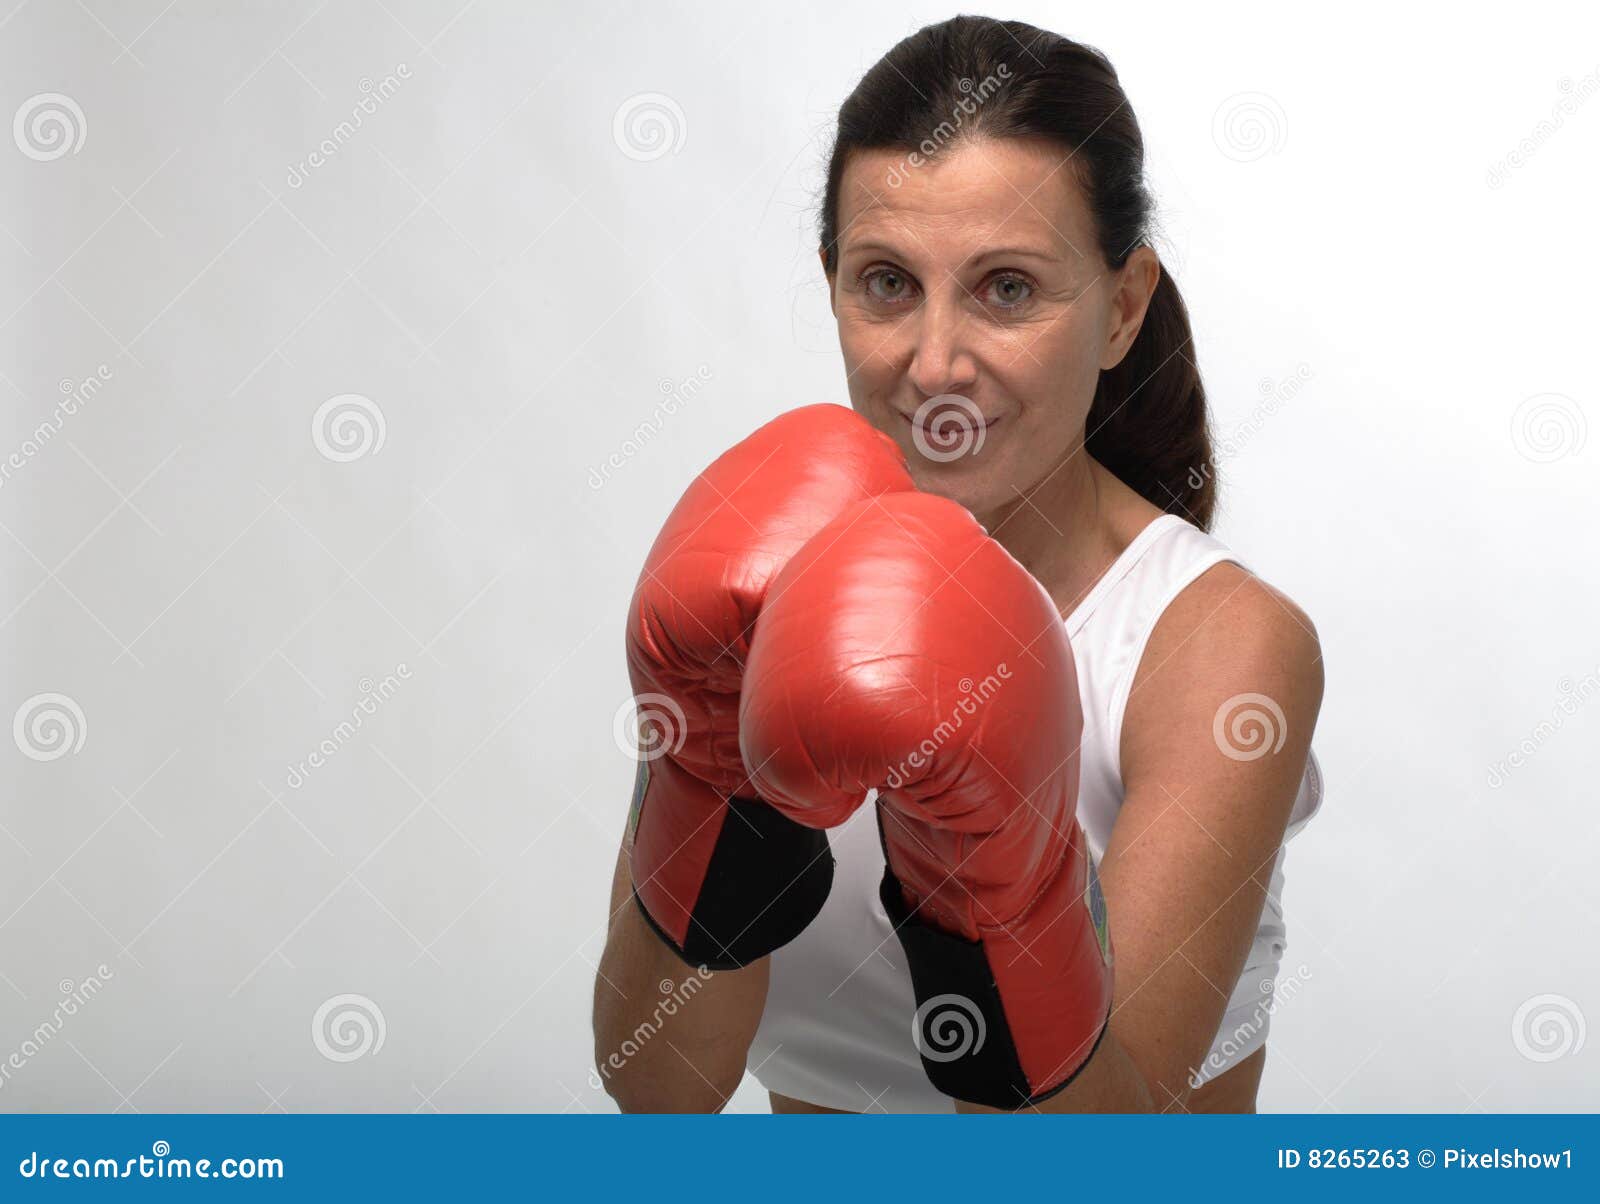 Woman boxing stock image photo